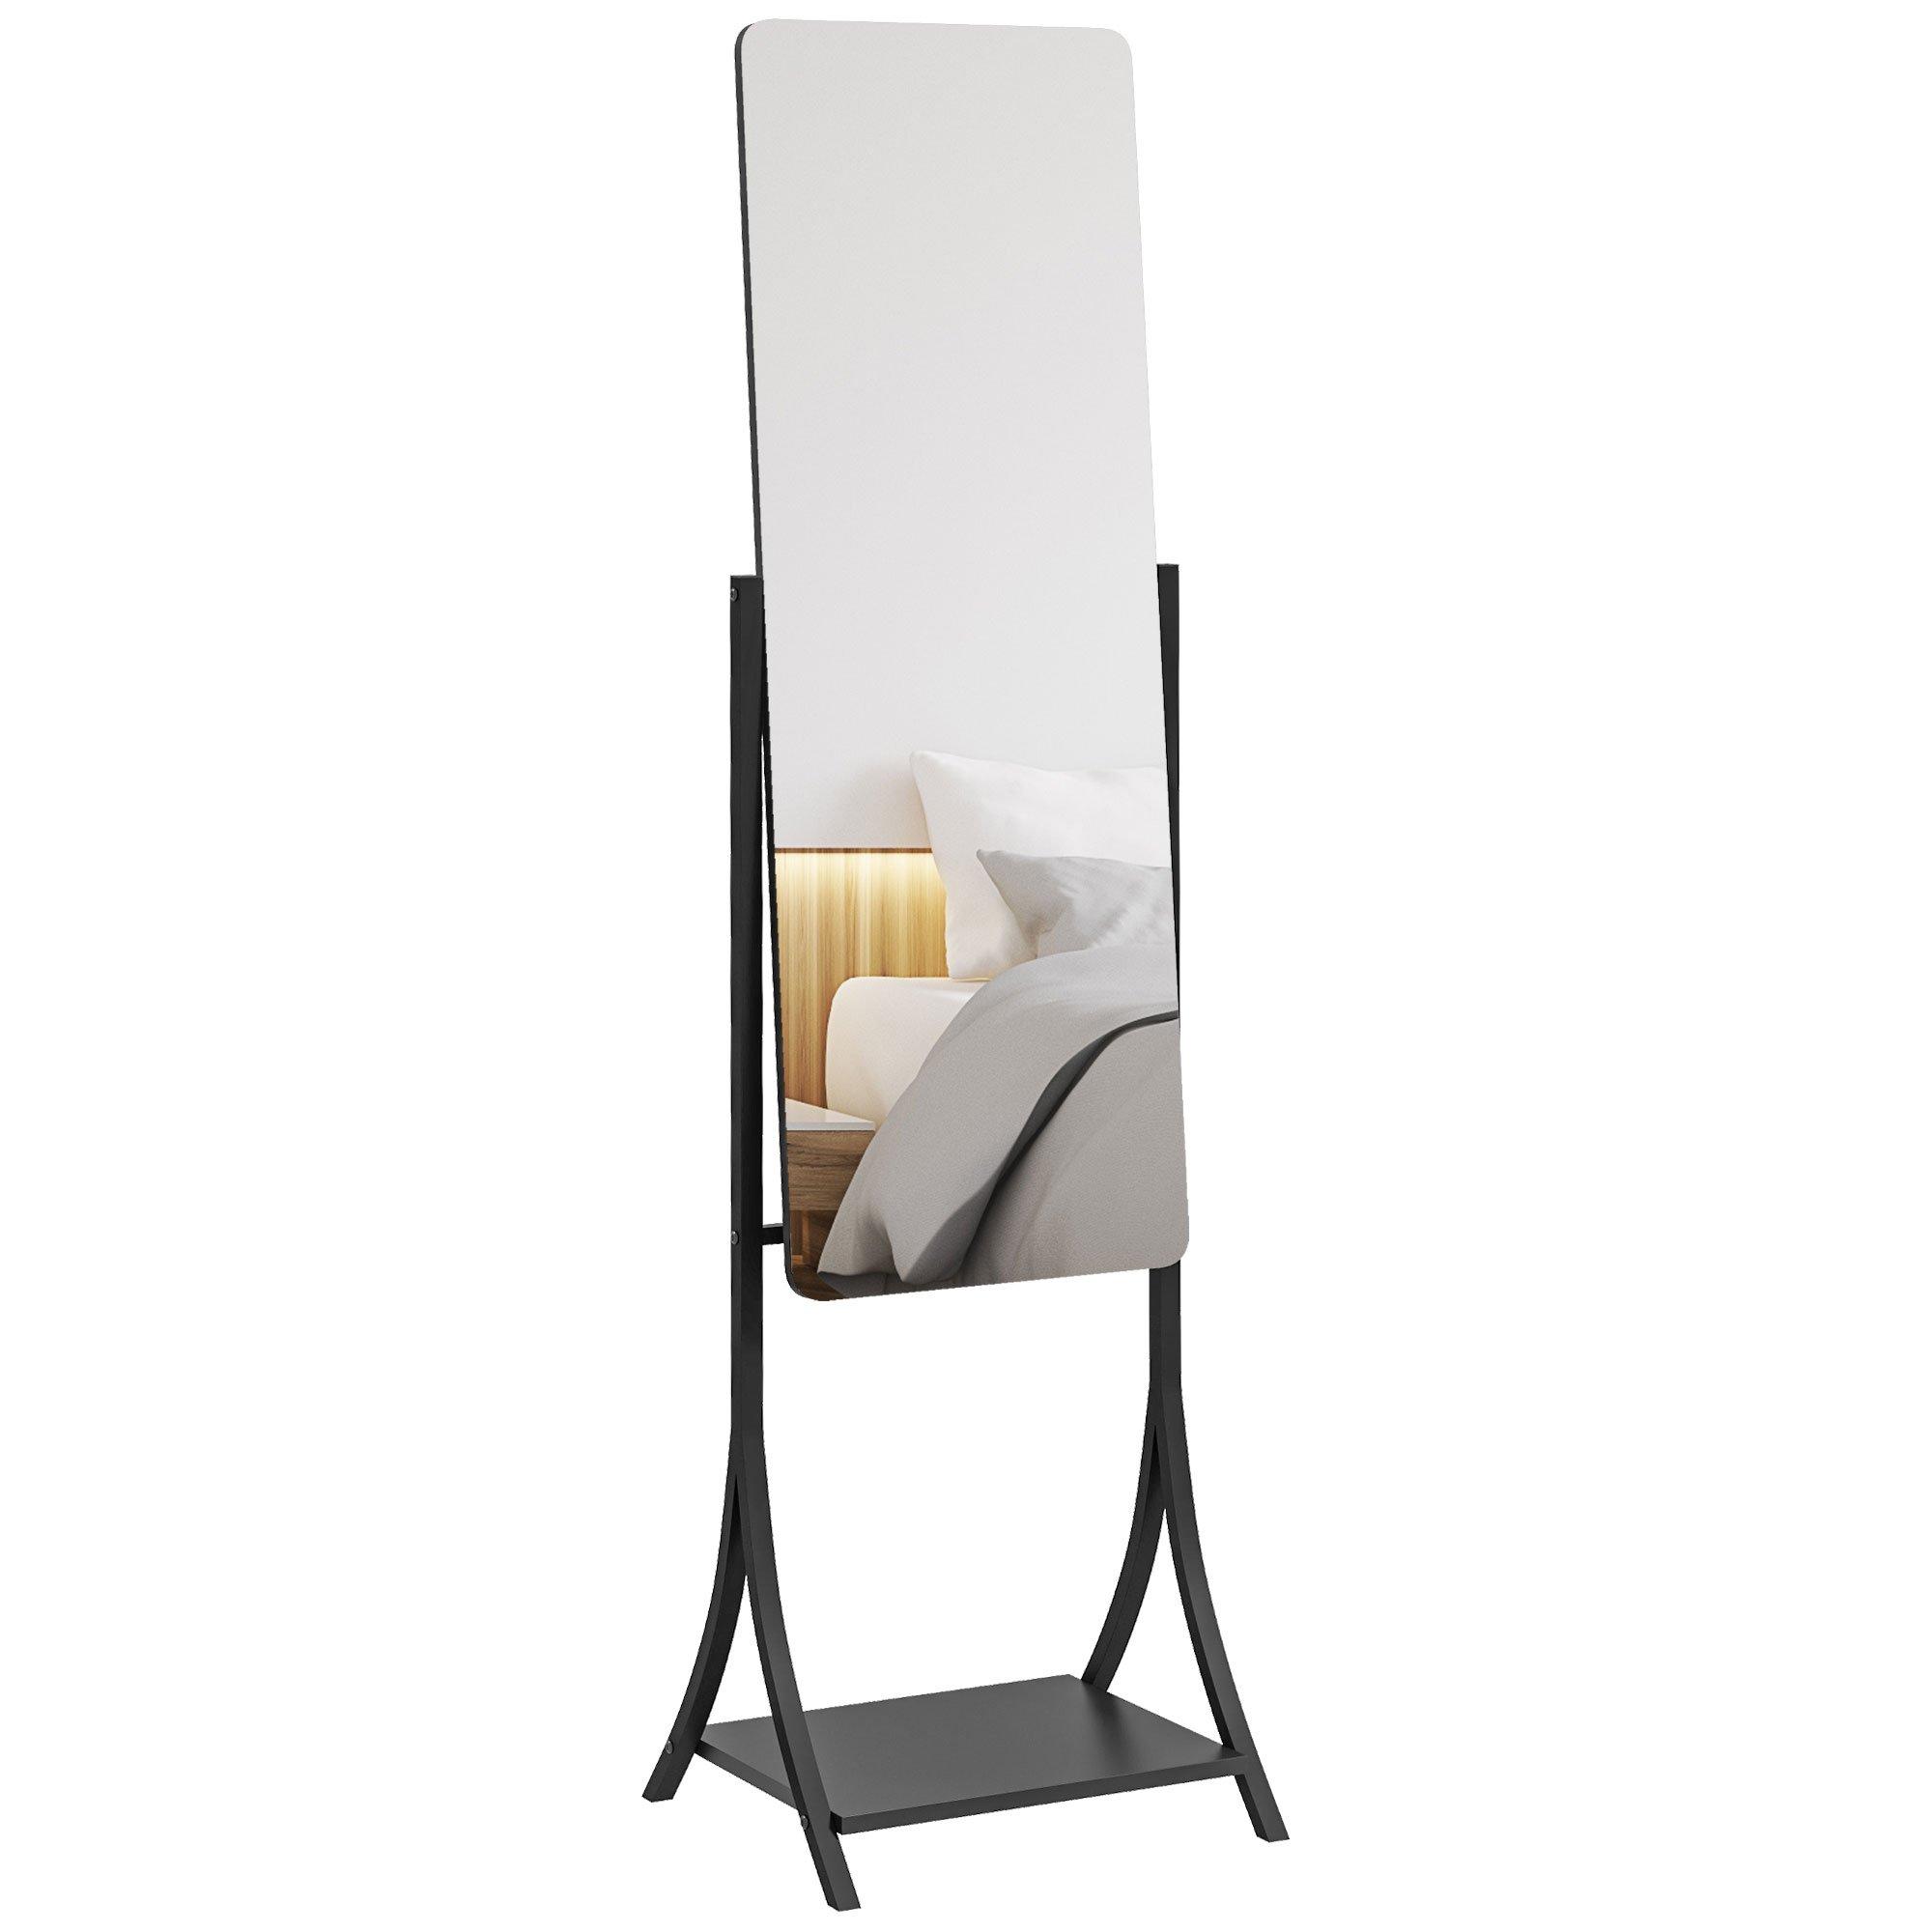 Freestanding Full Length Mirror Adjustable Full Body Mirror with Shelf